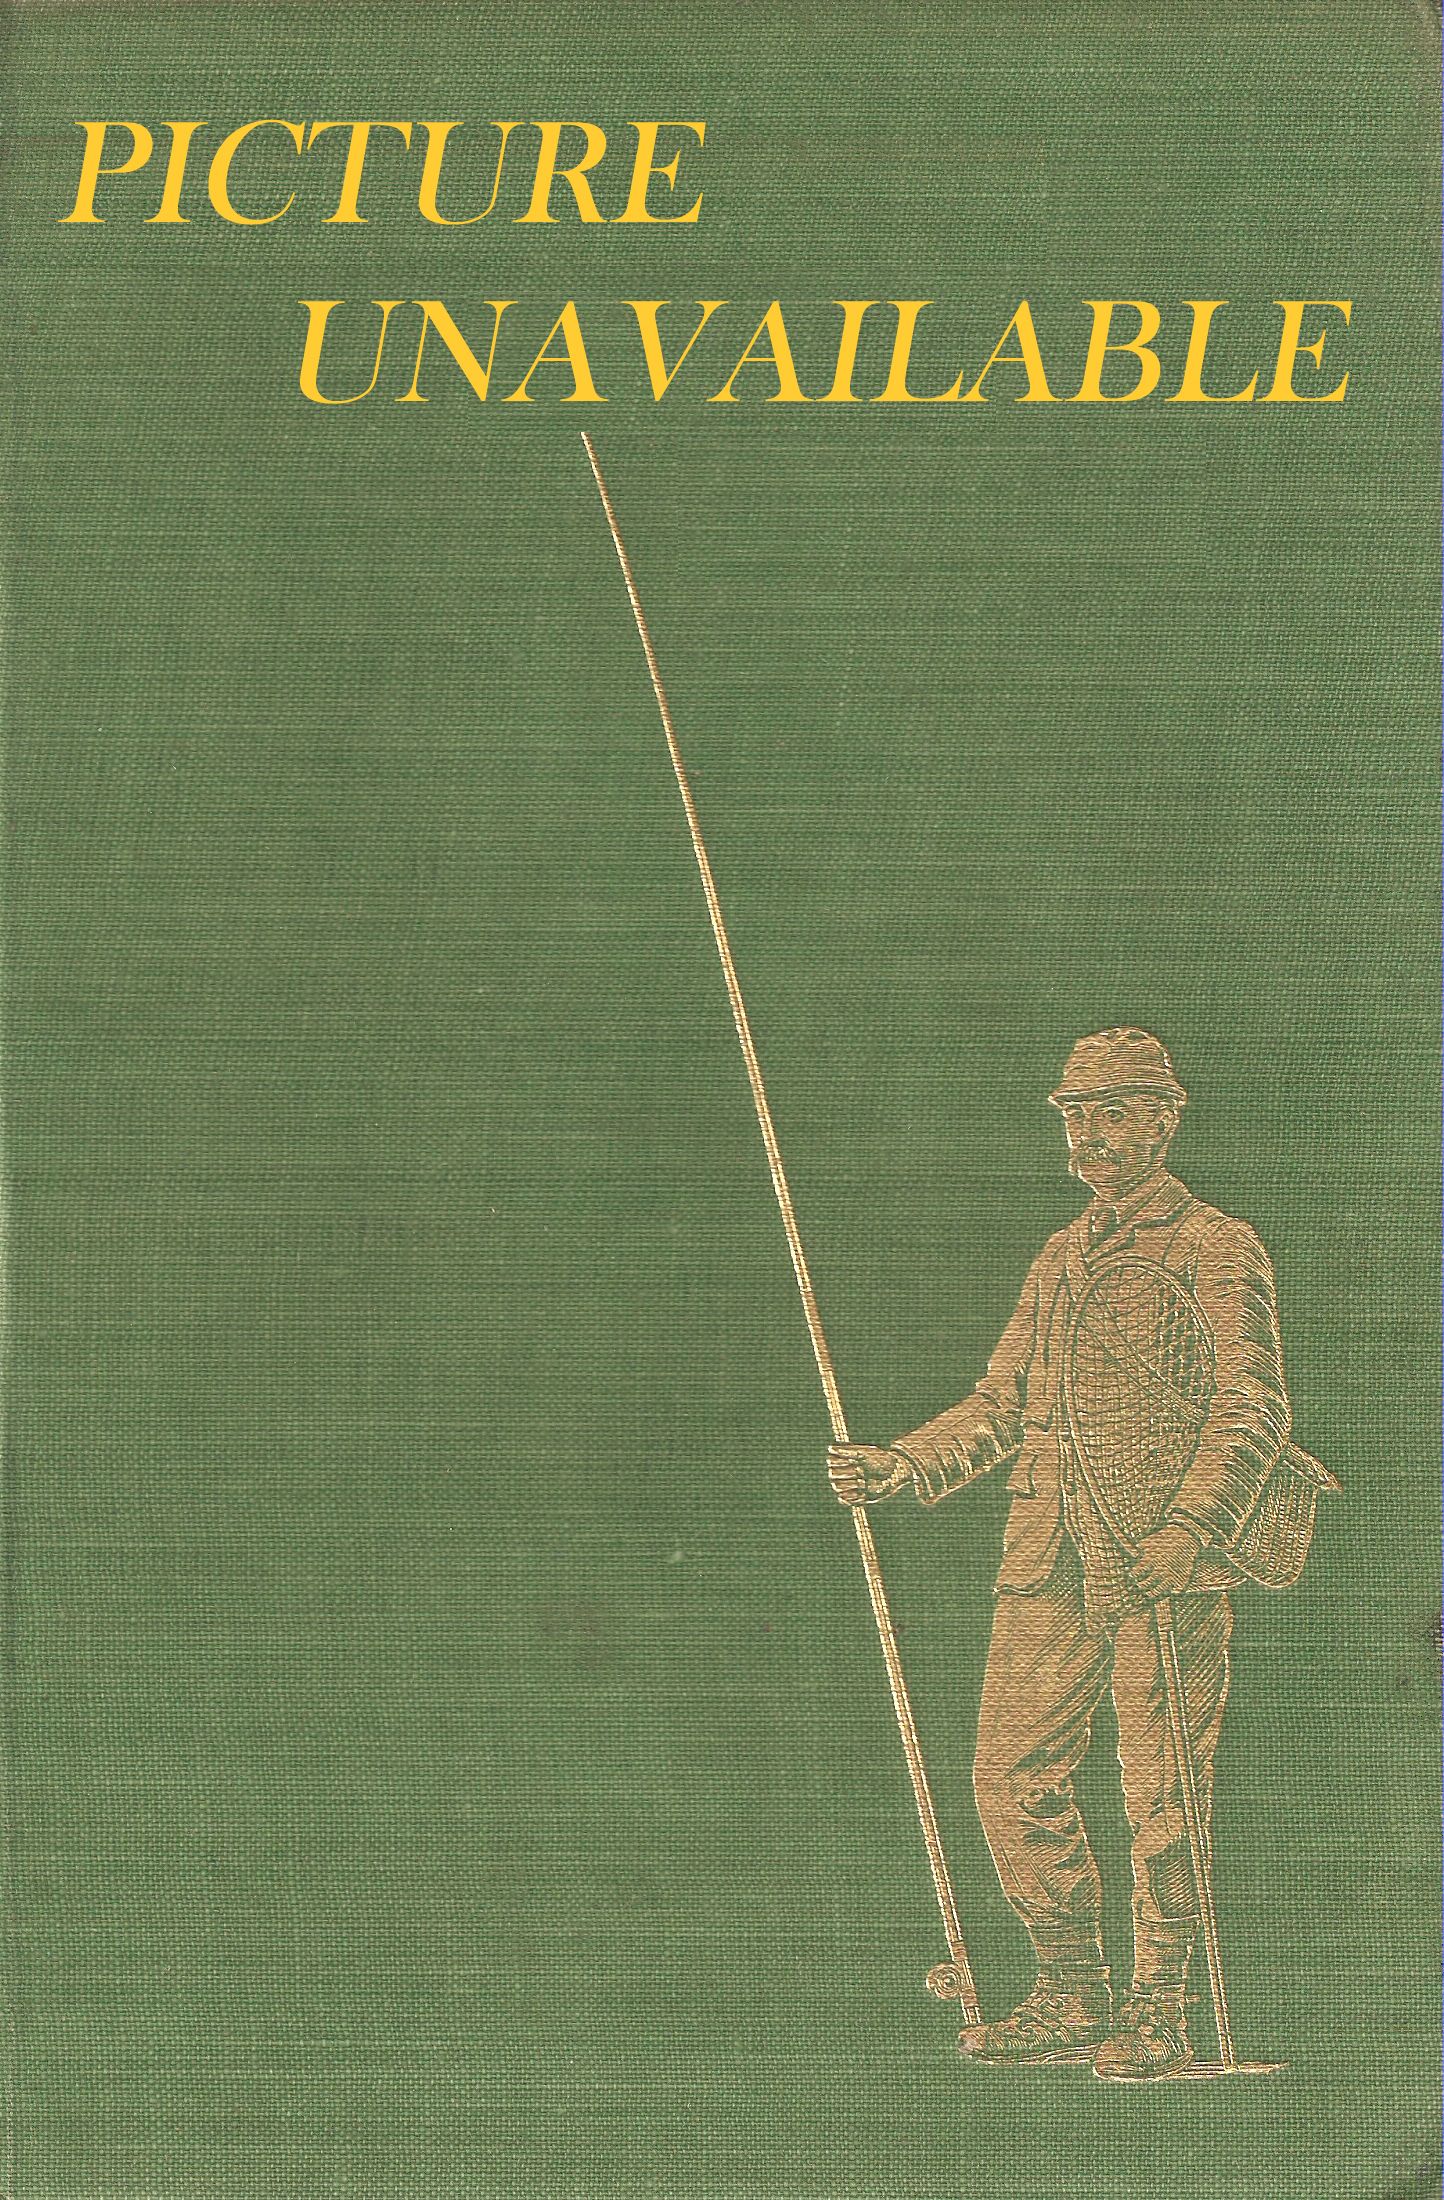 A HANDY BOOK OF FISHERY MANAGEMENT. By J.W. Willis-Bund, F.L.S.